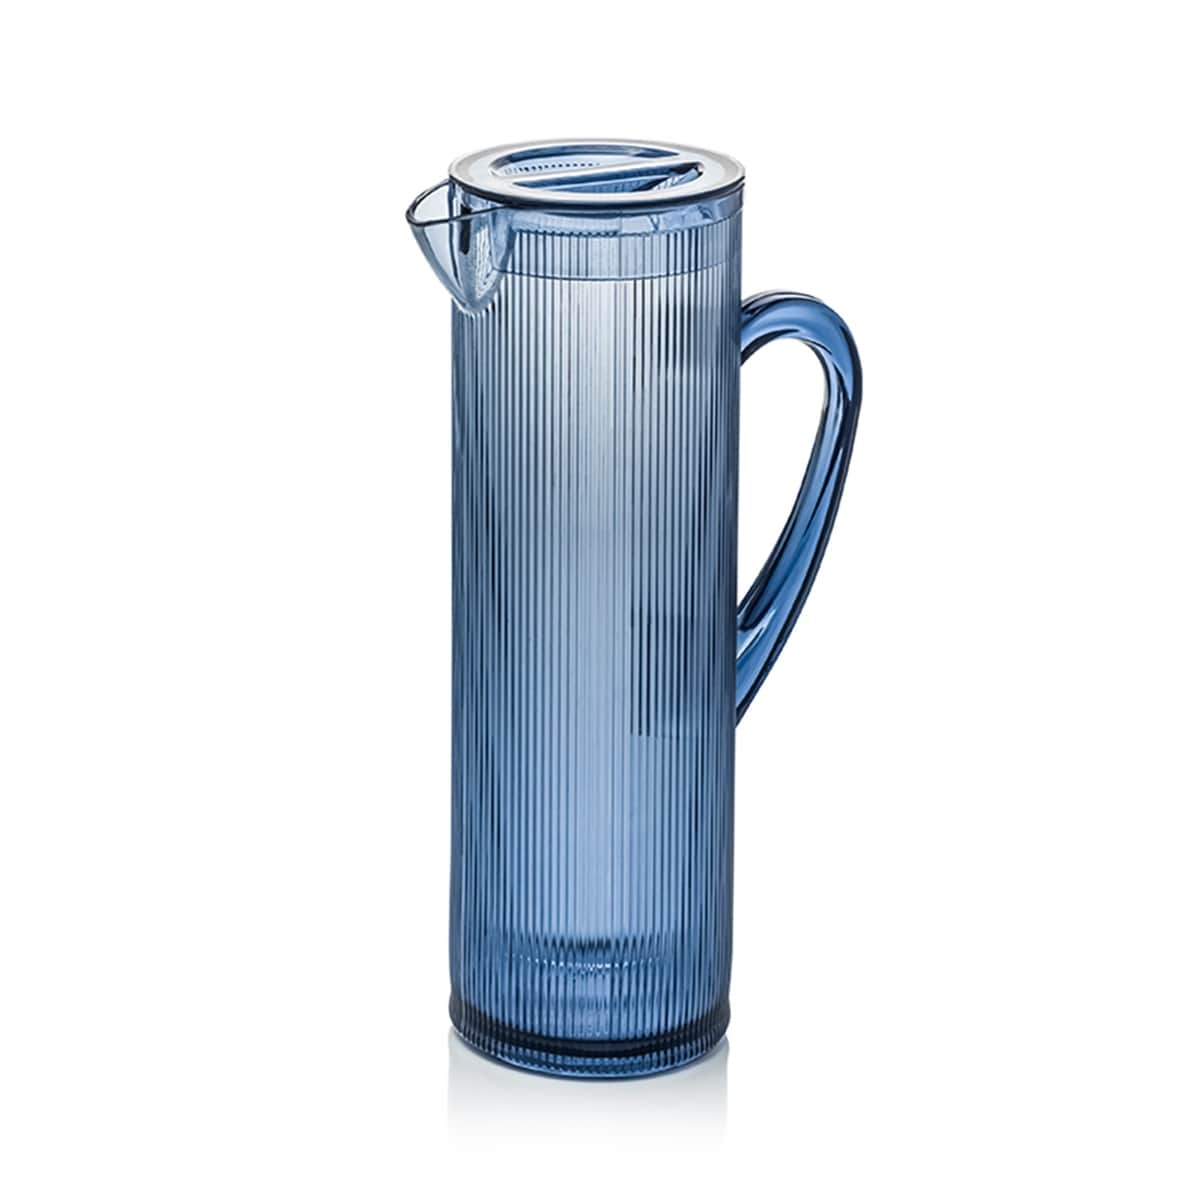 Elle Decor Acrylic Water Pitcher with Lid, 50-Ounces Iced Tea Pitcher for Fridge, Indigo Blue Tall Jug